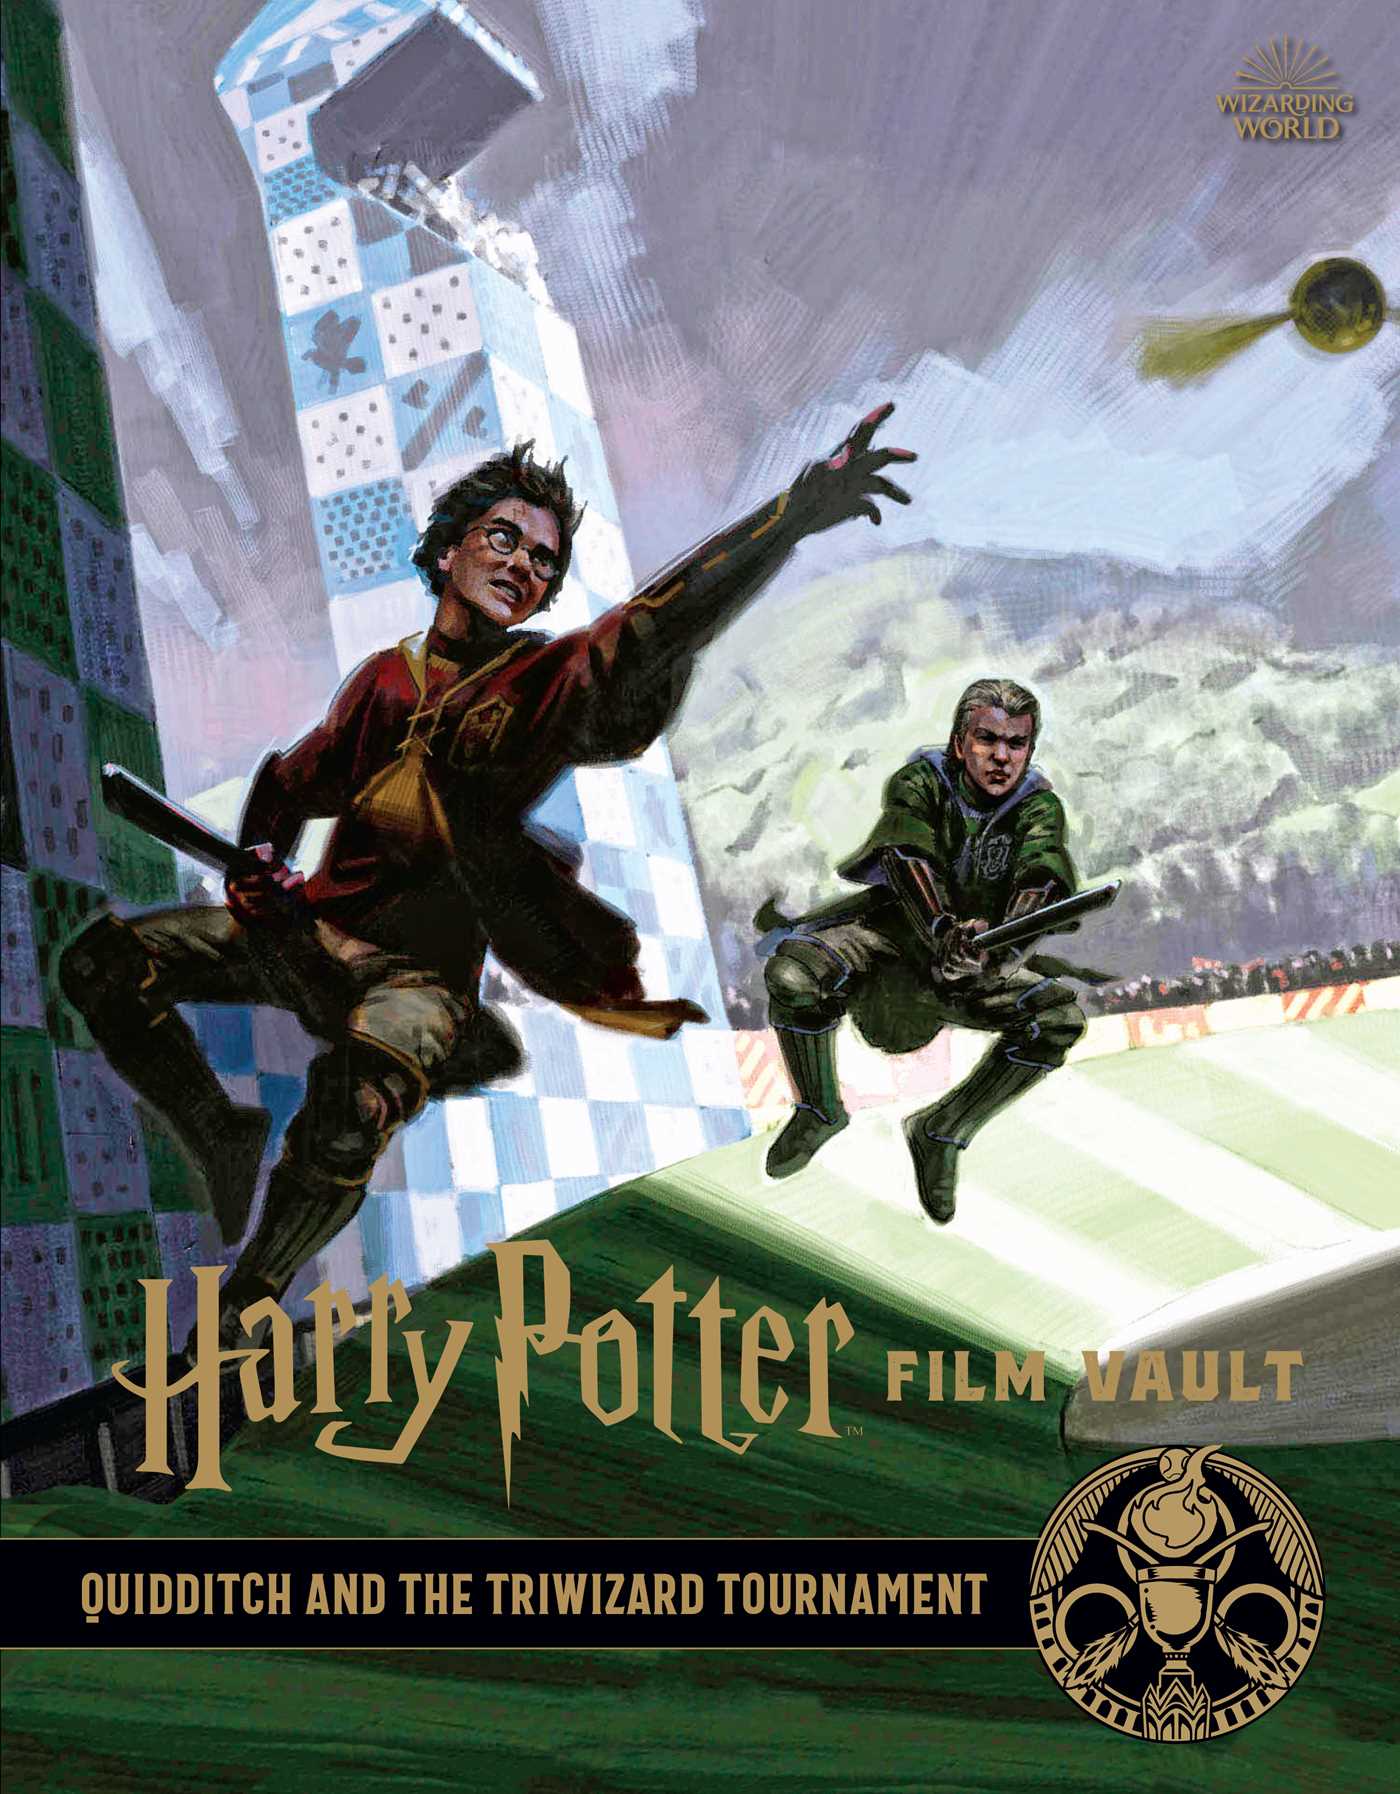 "Harry Potter" Film Vault Series